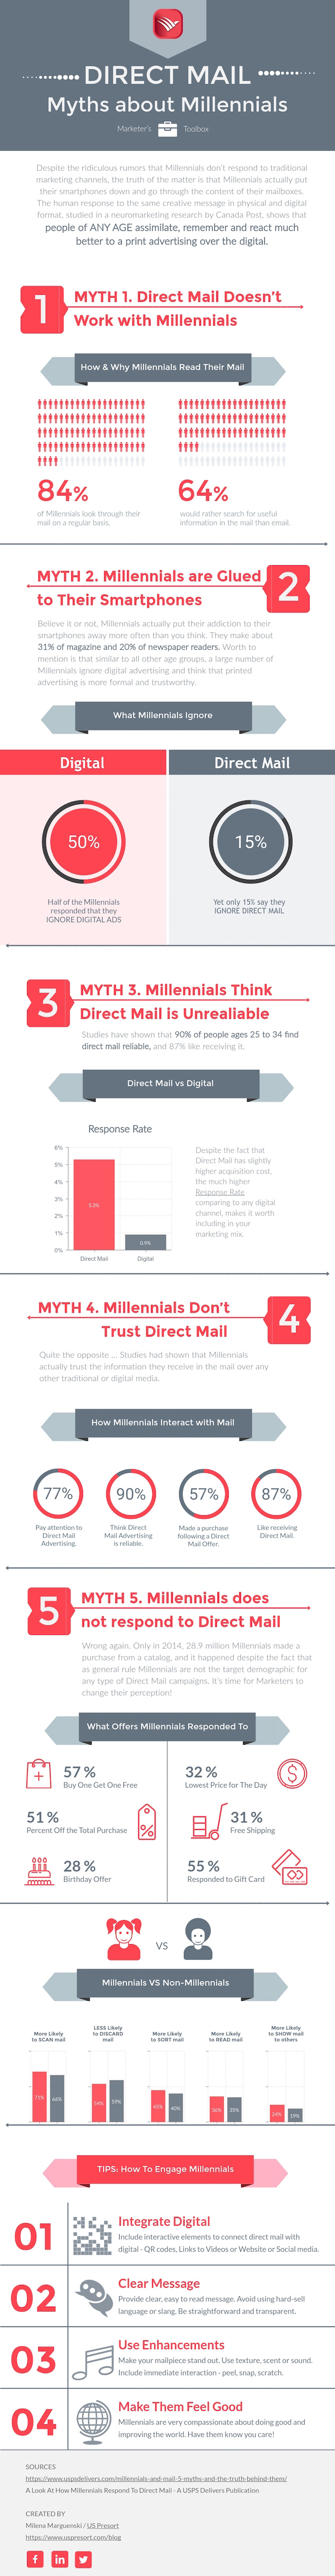 Millennials and Direct Mail